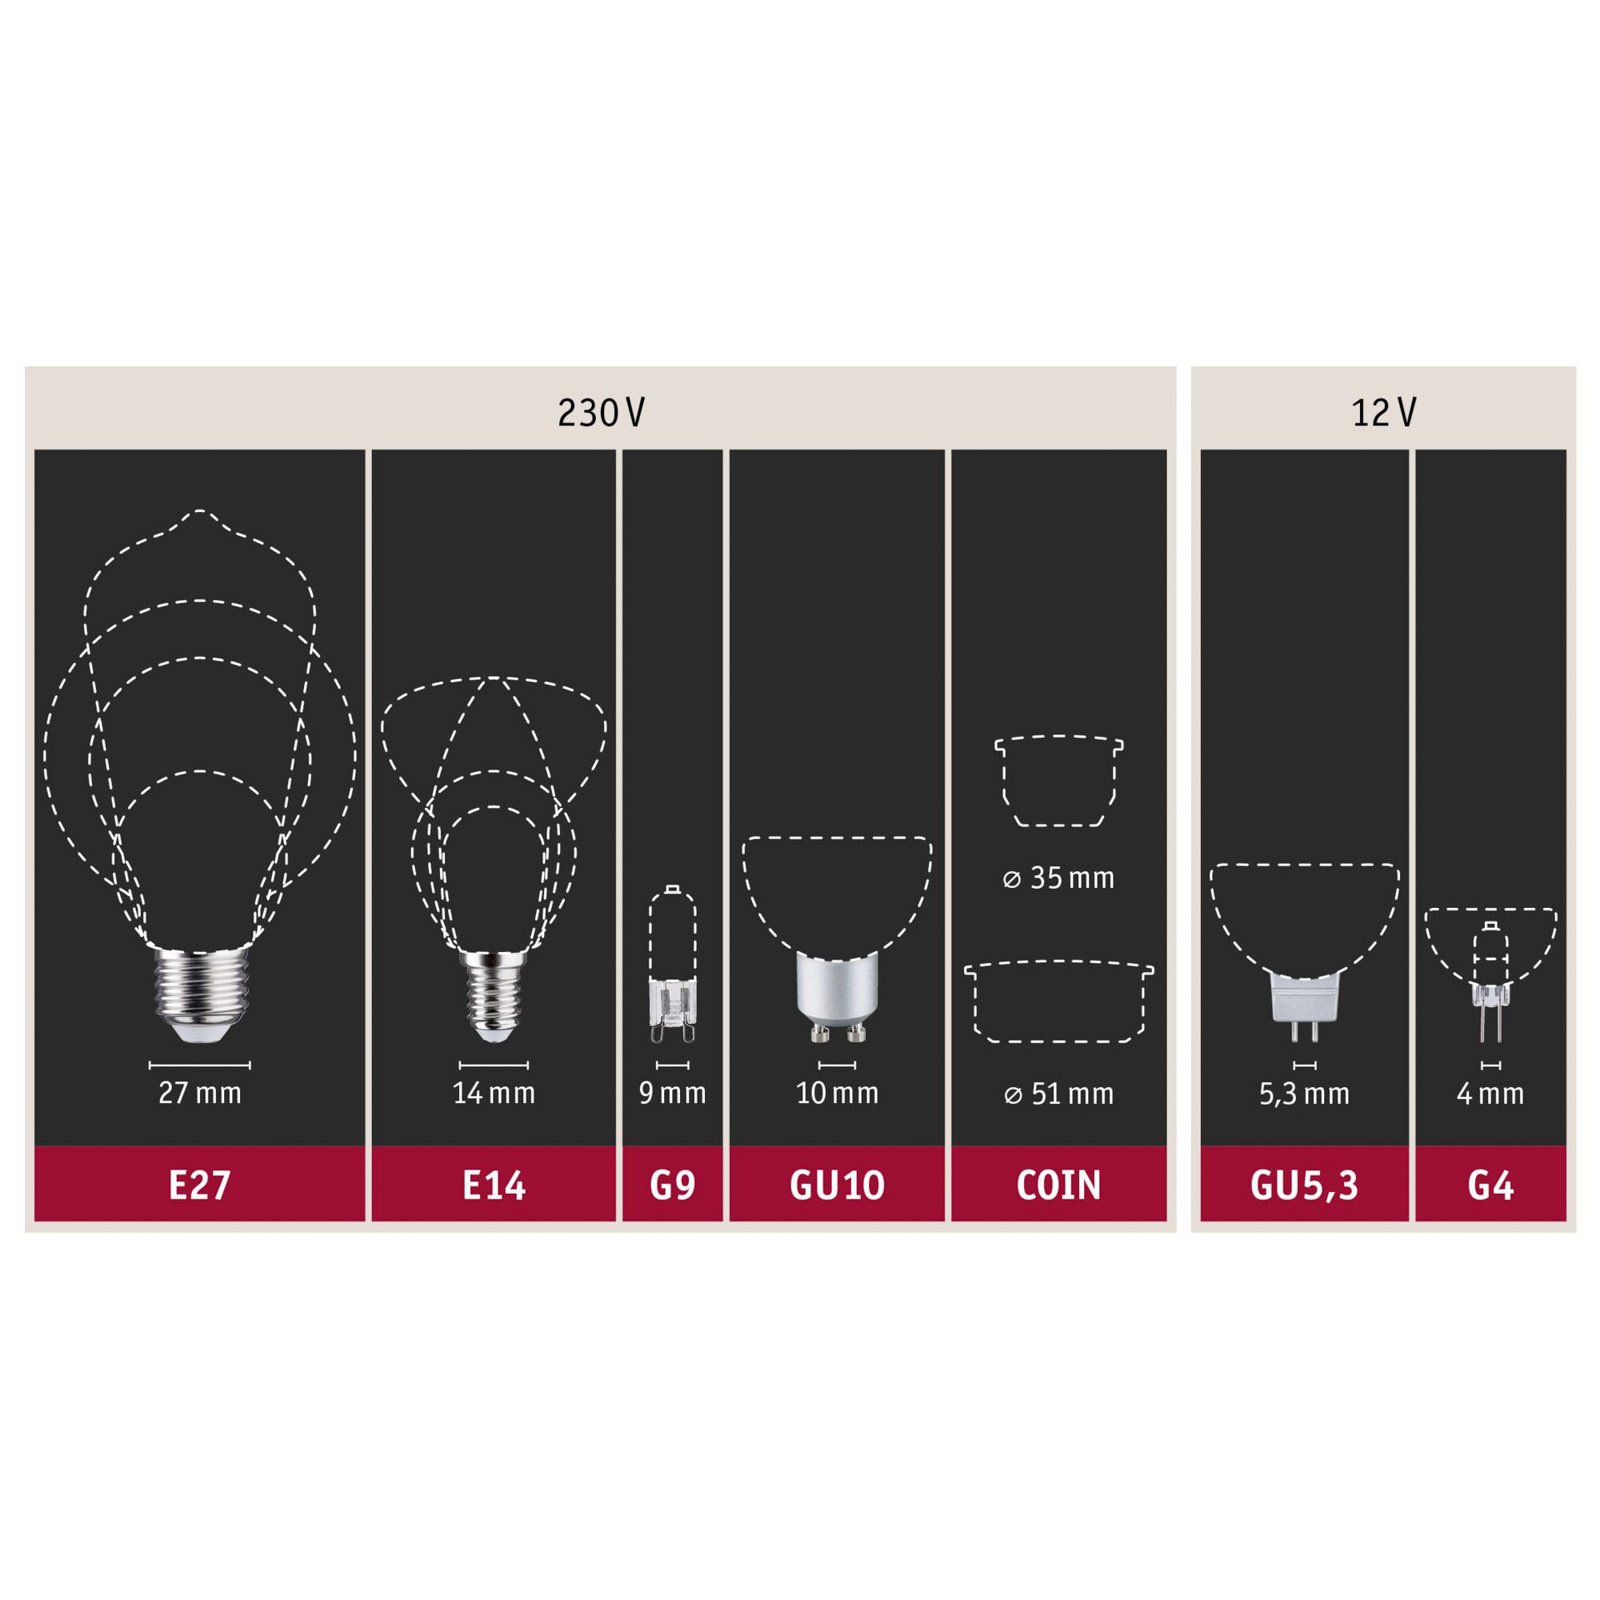 Lampadina LED E14 5W goccia 2.700K opaca, dimmerabile